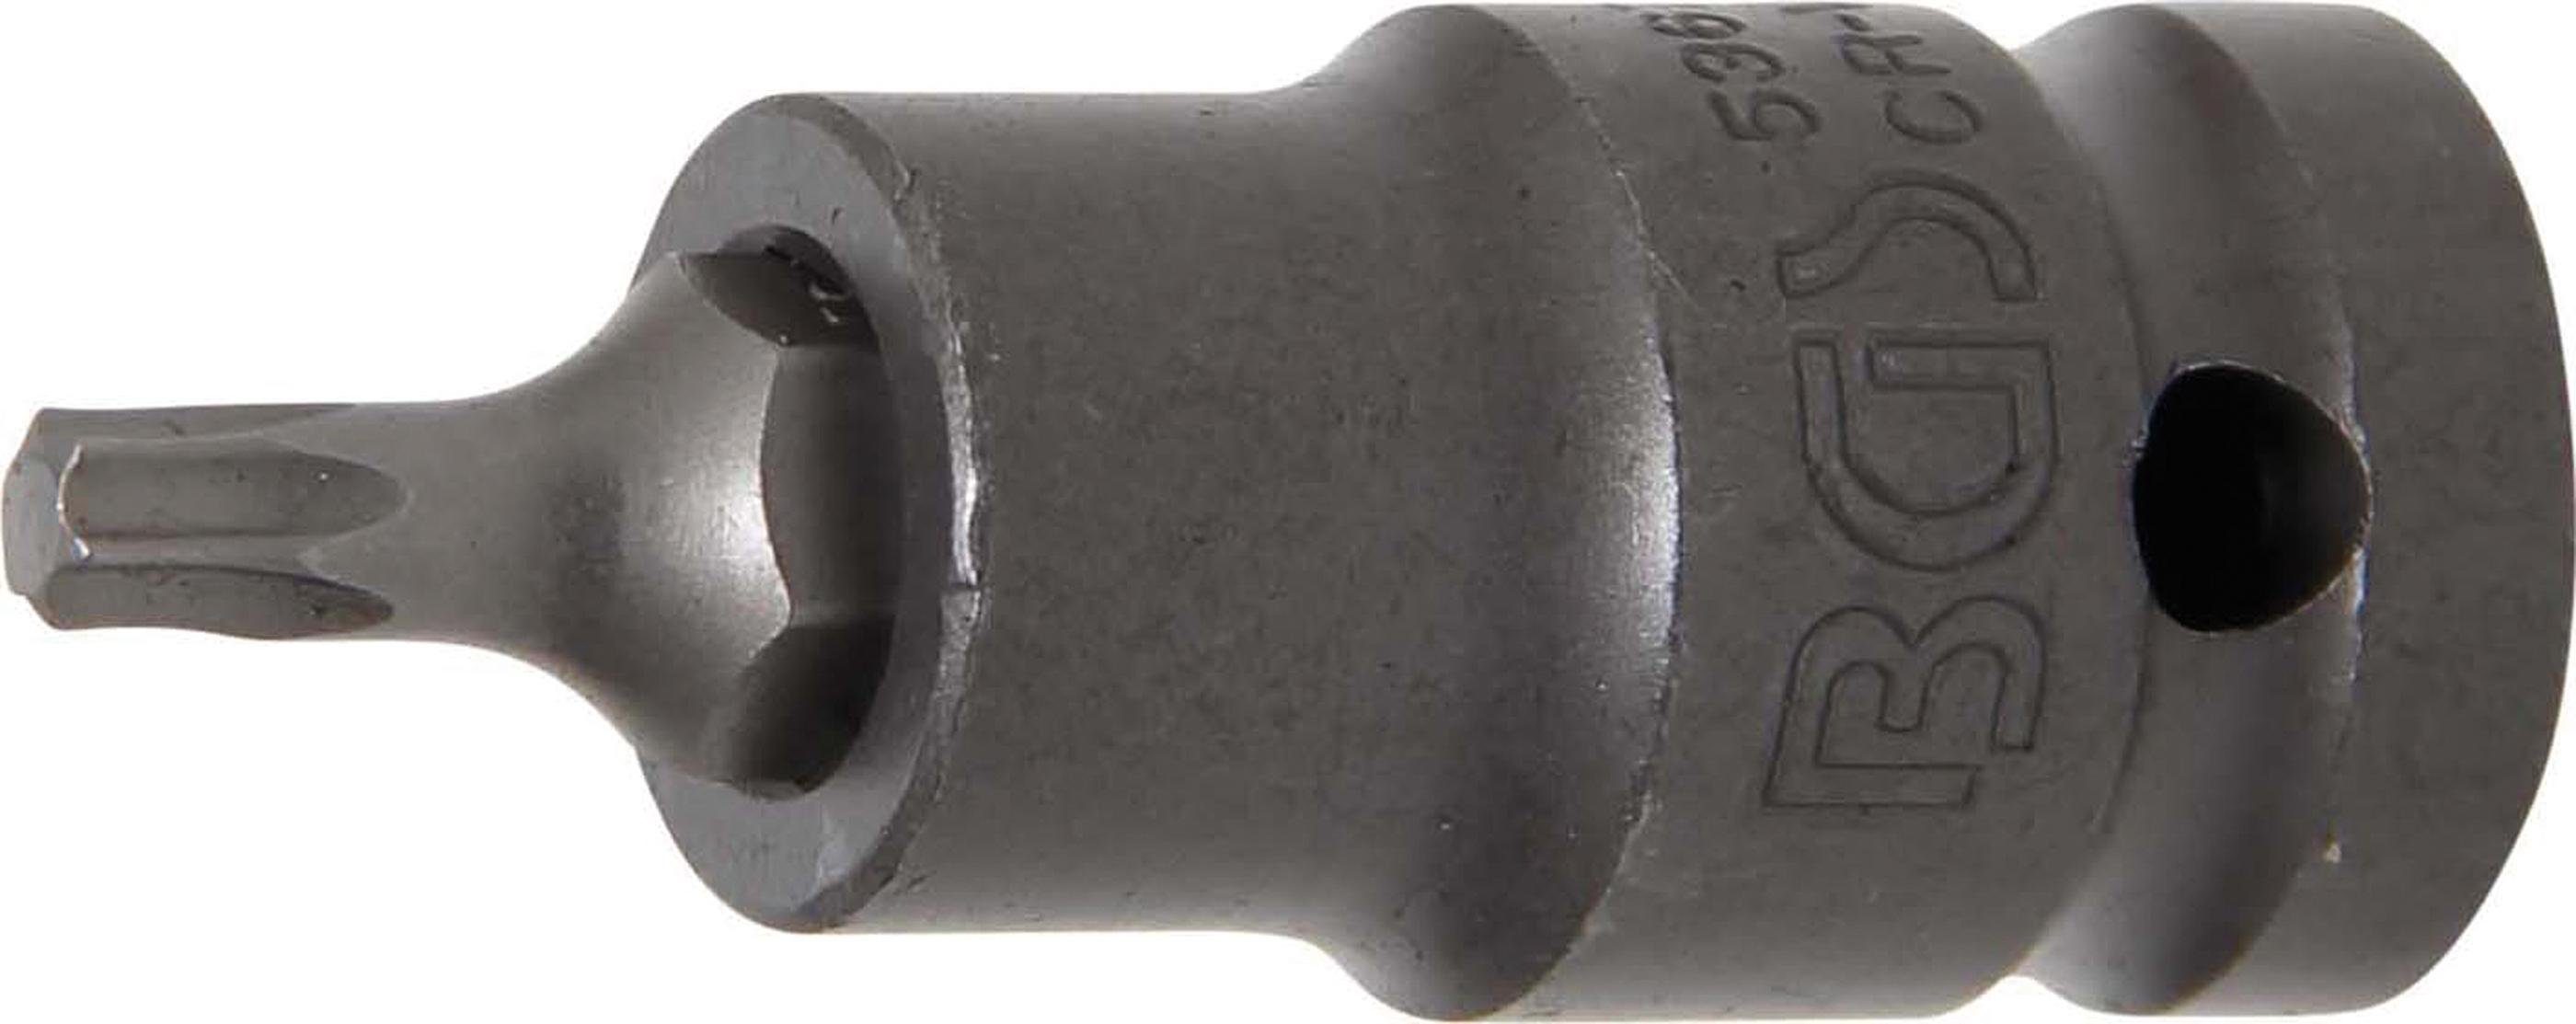 BGS technic Bit-Schraubendreher Kraft-Bit-Einsatz, Antrieb Innenvierkant 12,5 mm (1/2), T-Profil (für Torx) T27